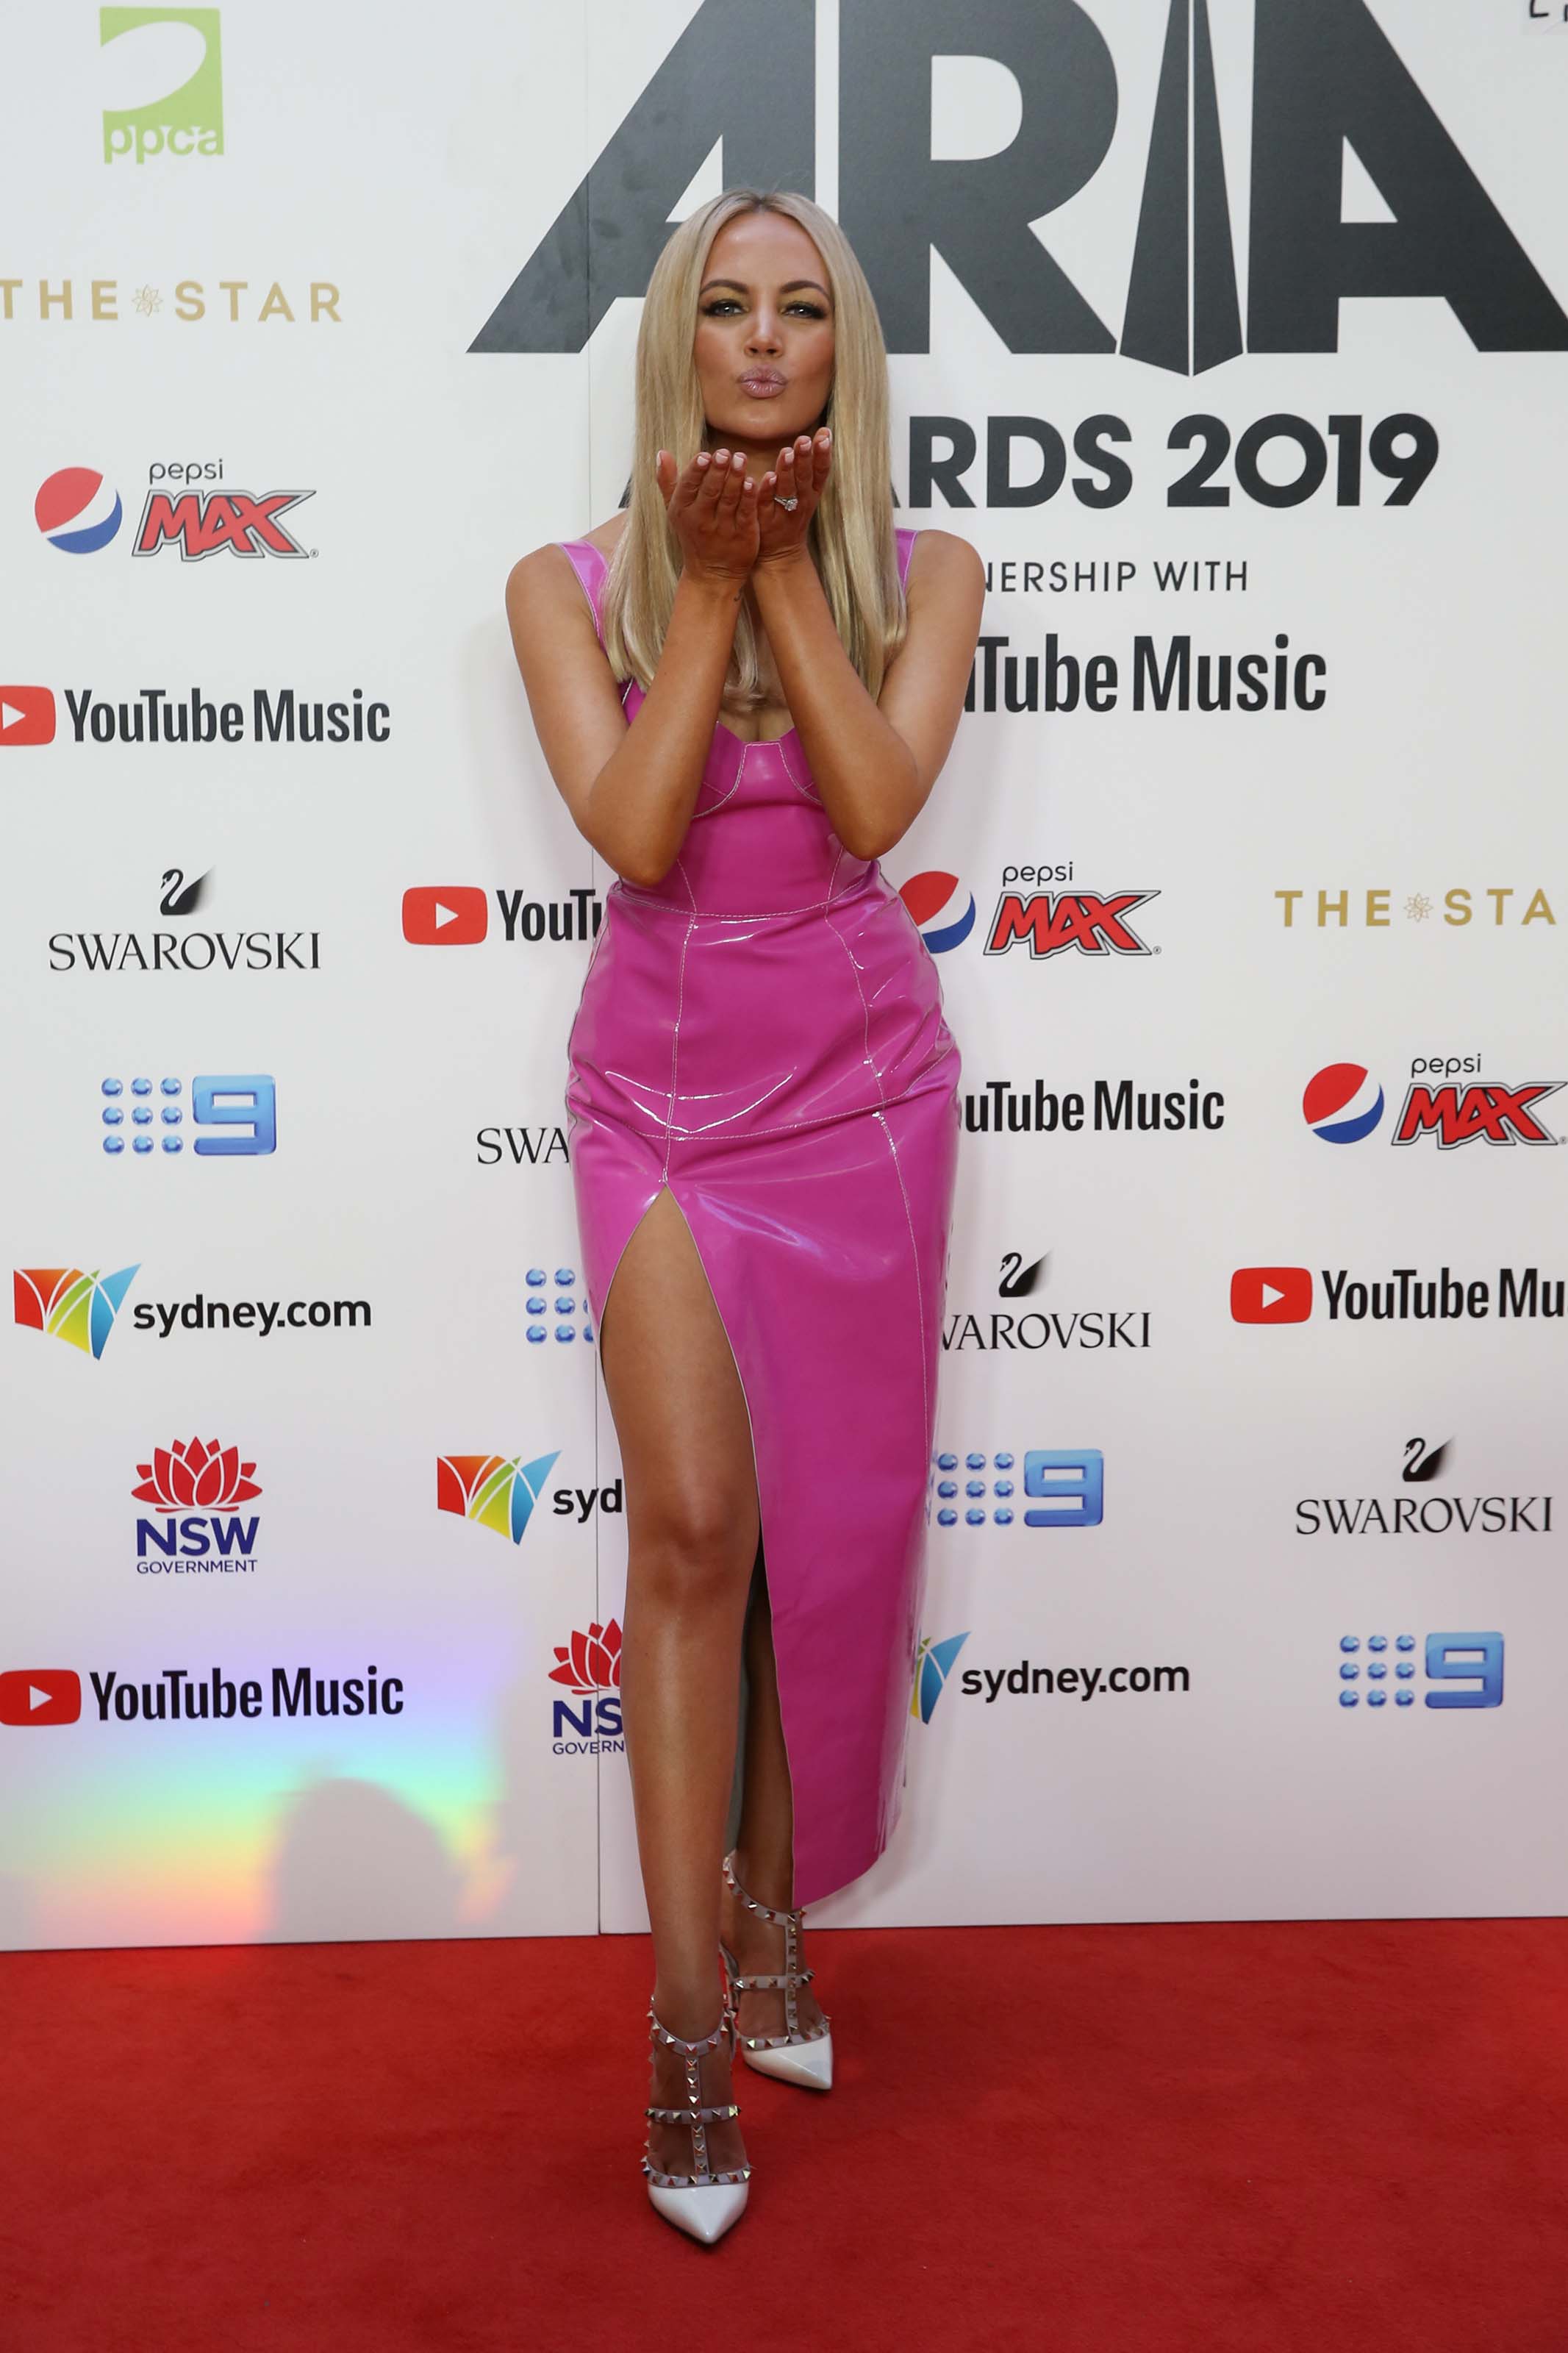 Samantha Jade attends 33rd Annual ARIA Awards